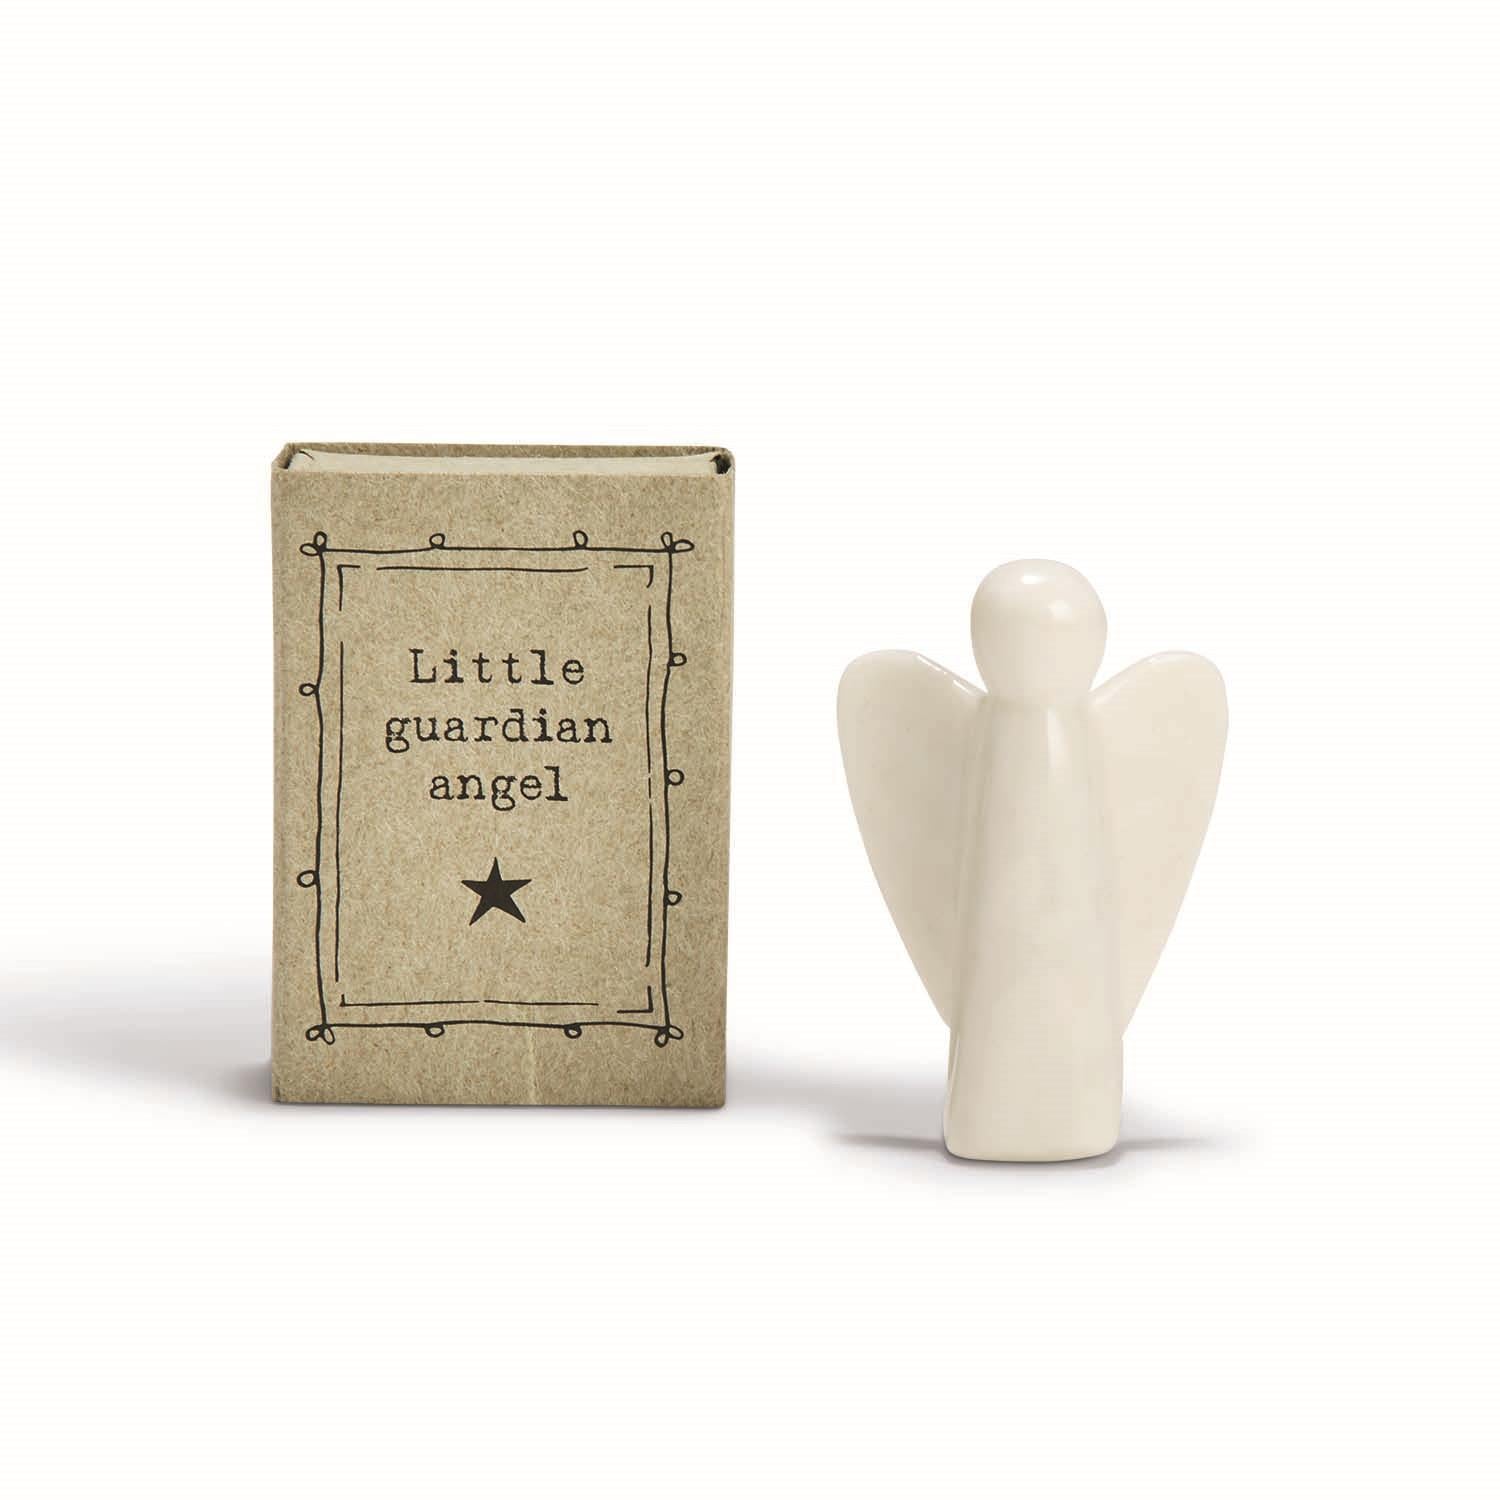 Little Guardian Angel Matchbox in Gift Box Designed - Porcelain